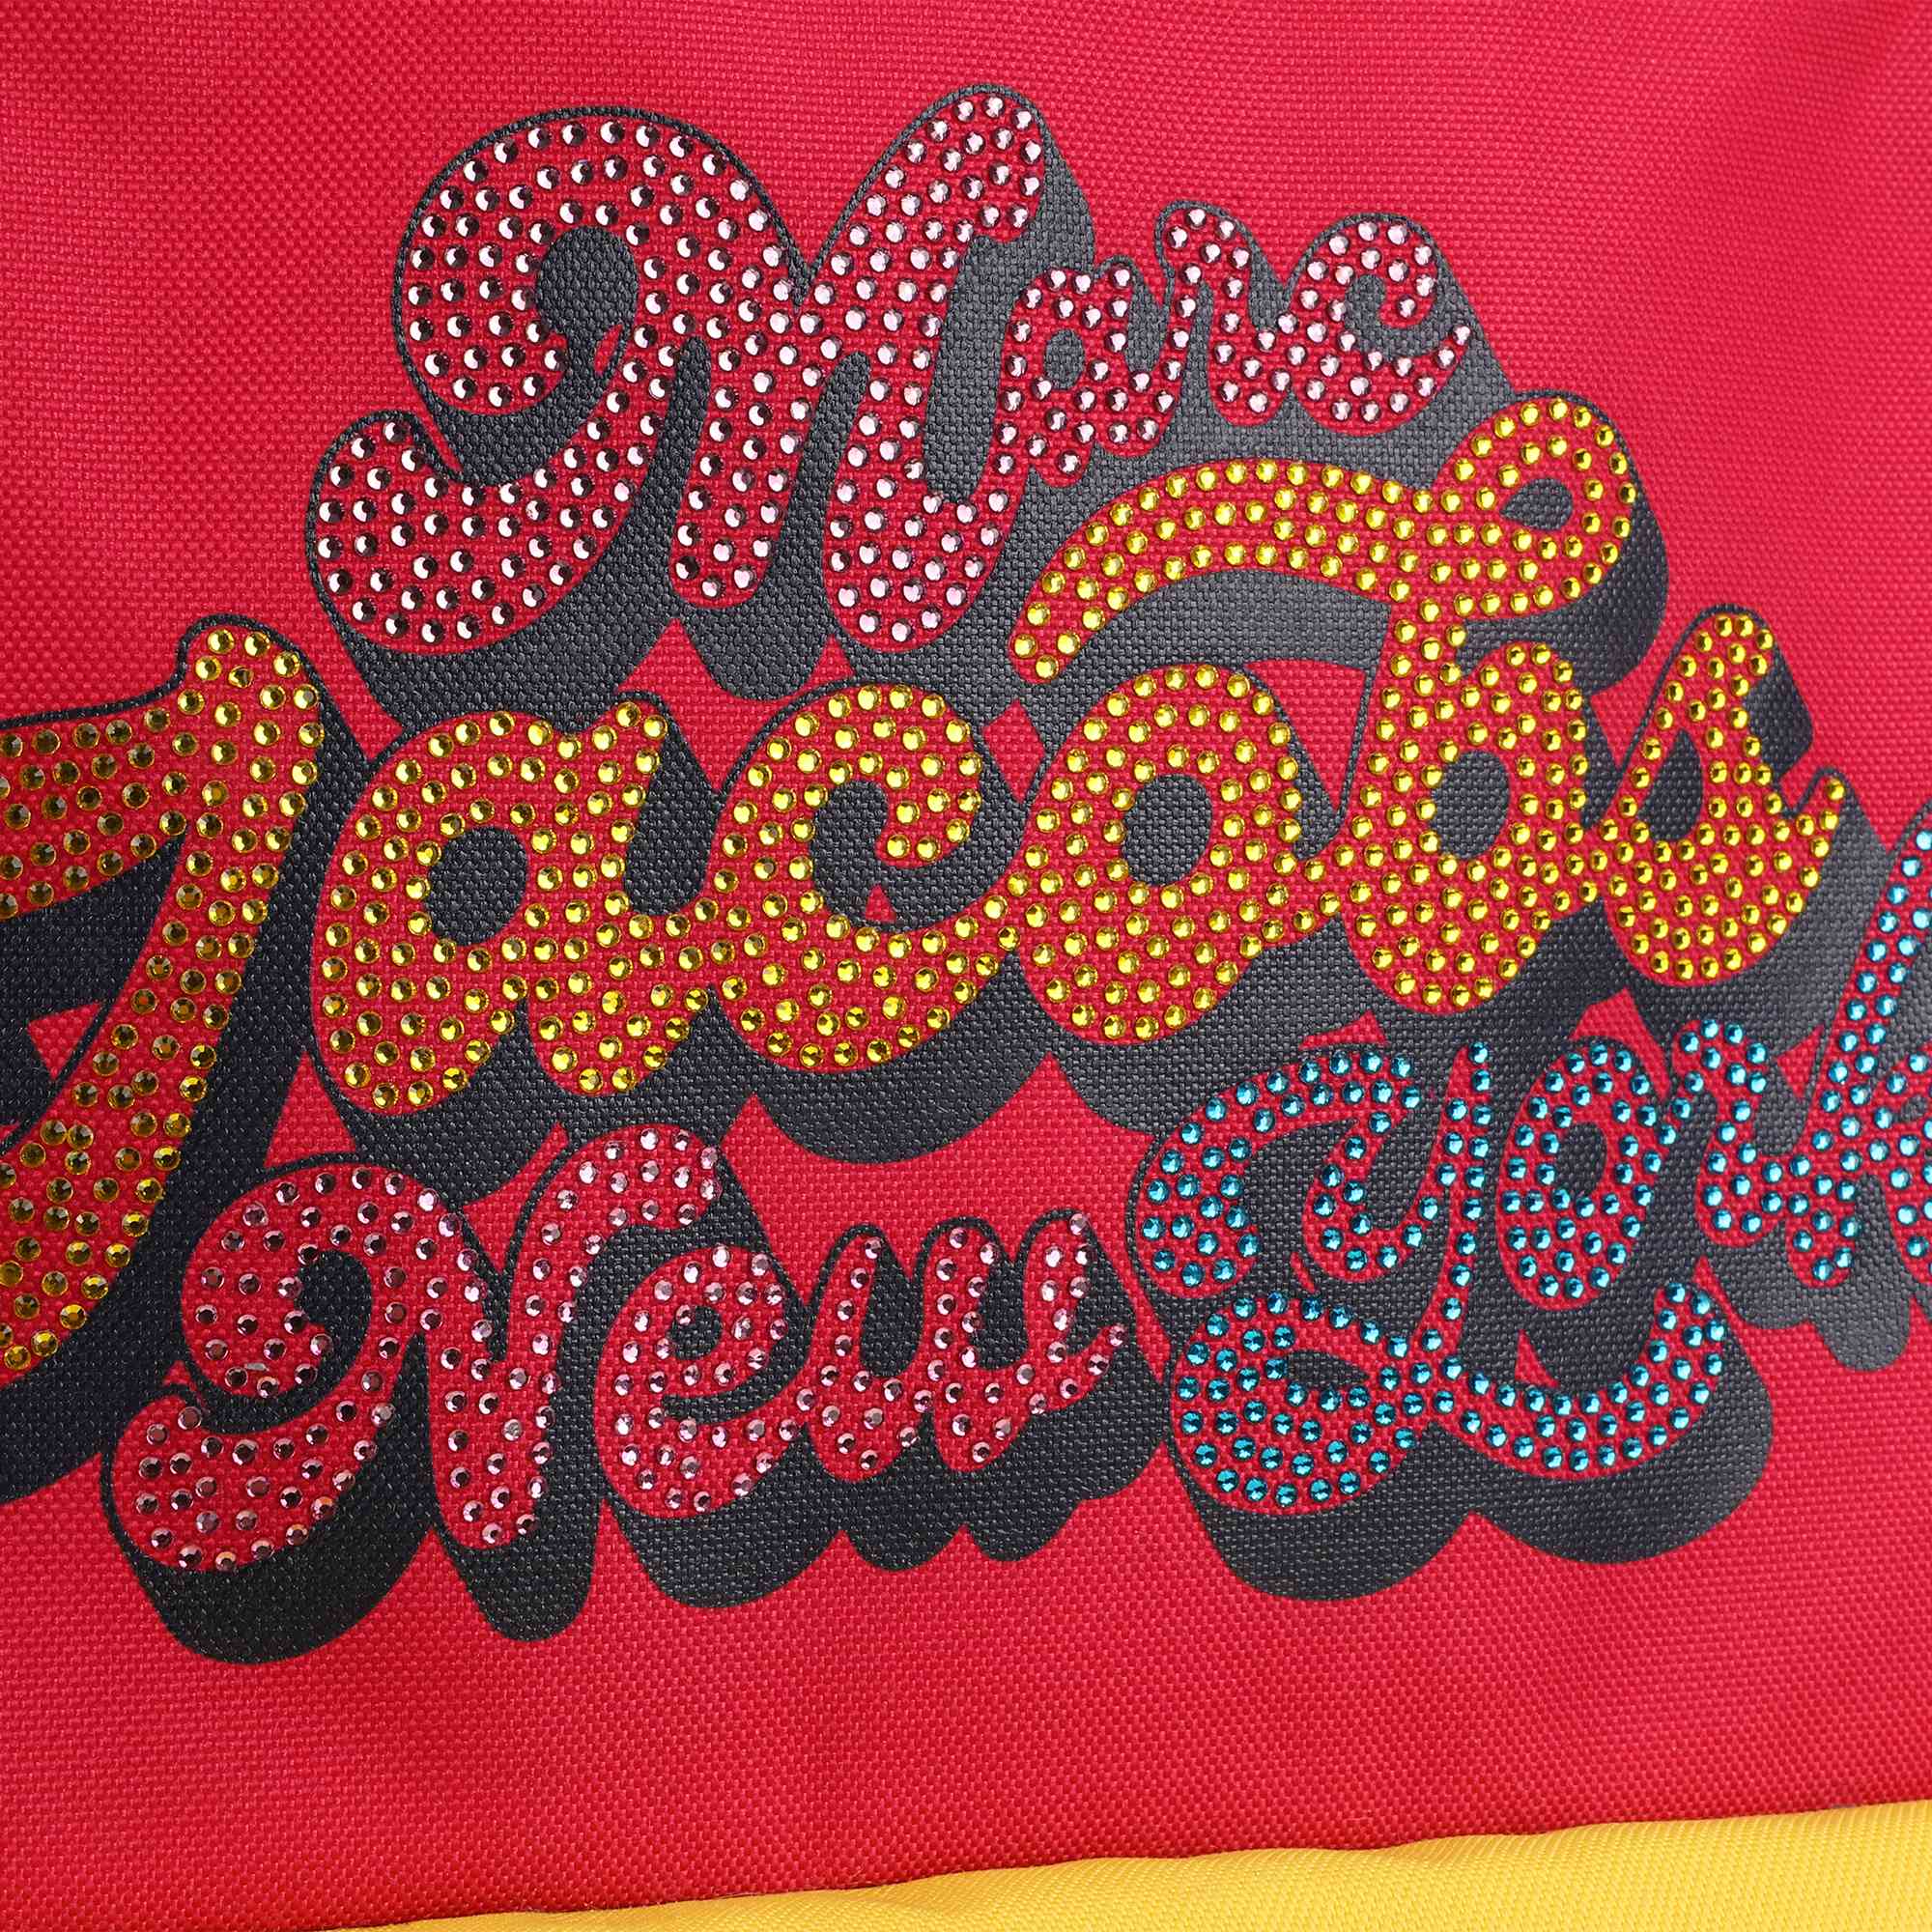 Textured glitter backpack MARC JACOBS for GIRL